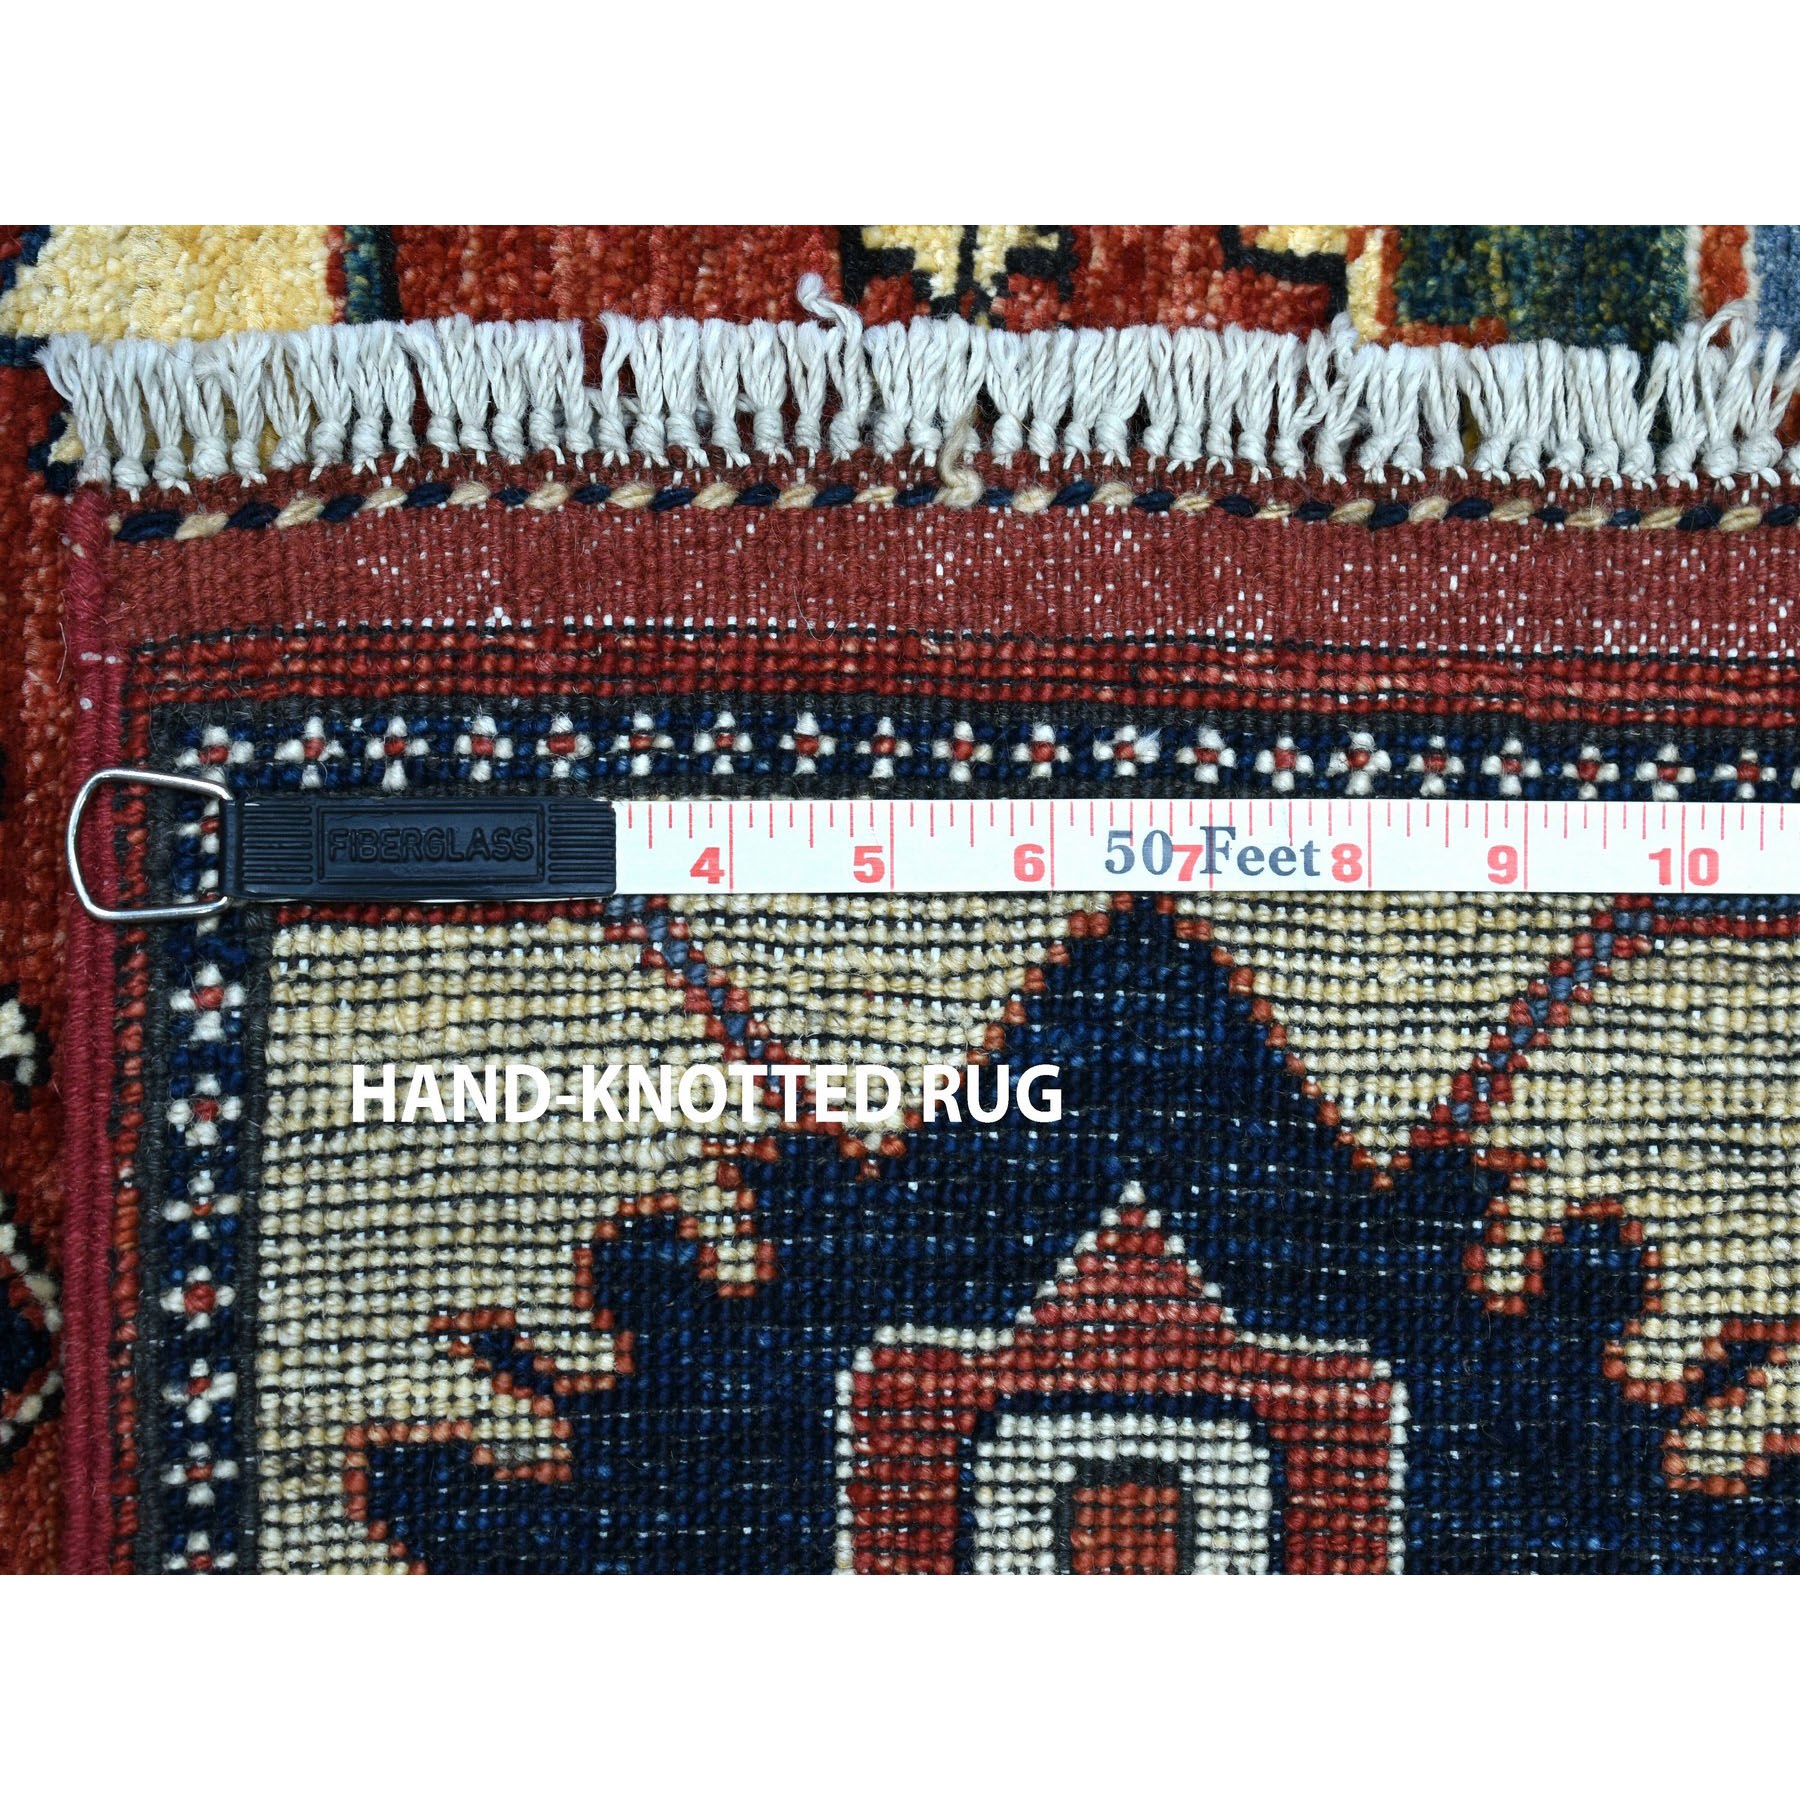 3-5 x4-9  Afghan Ersari Pure Wool Hand-Knotted Oriental Rug 